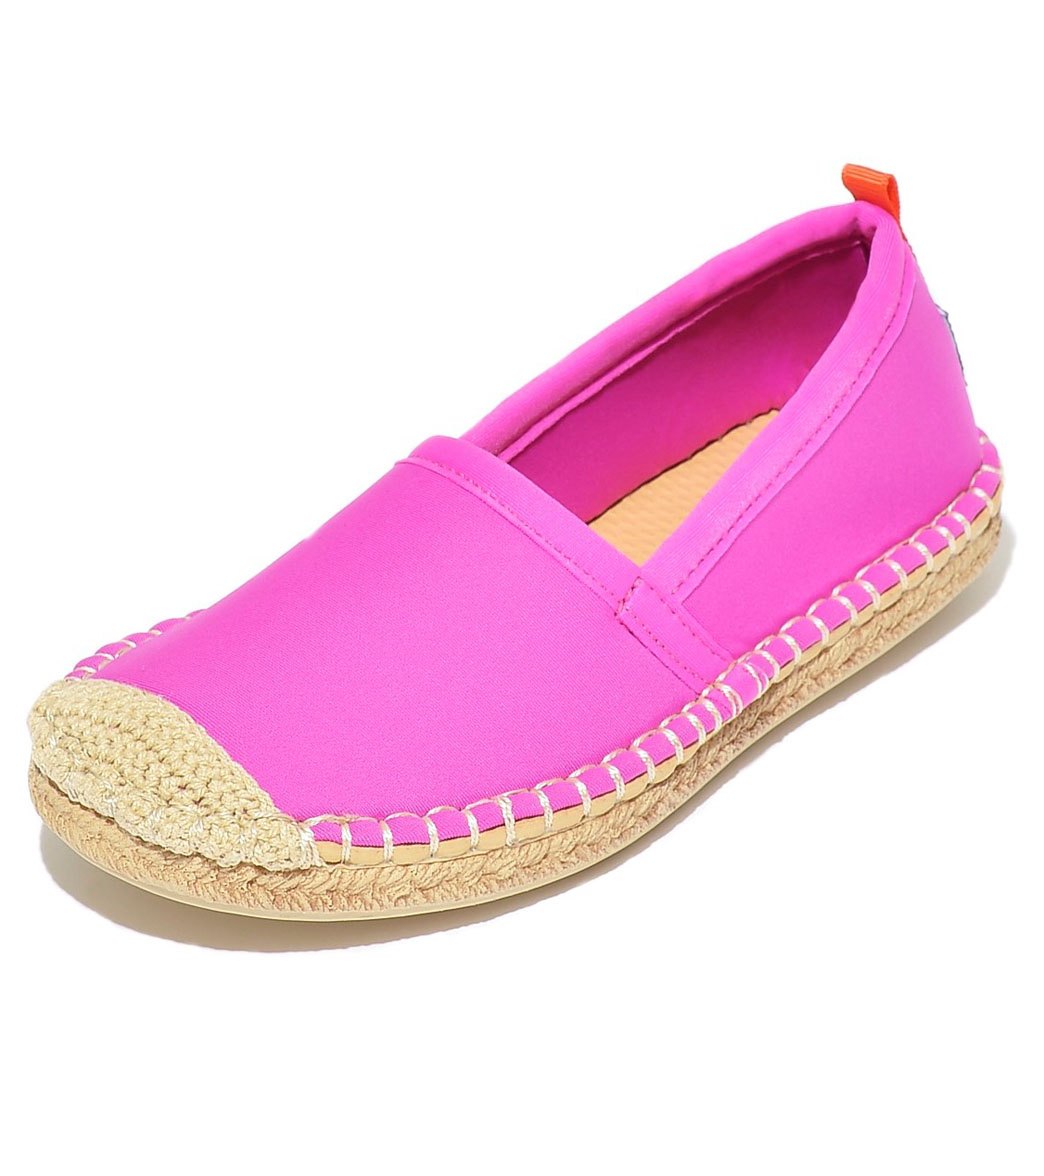 Sea Star Beachwear Girls' Beachcomber Espadrille Water Shoe Big Kid - Hot Pink 1 - Swimoutlet.com